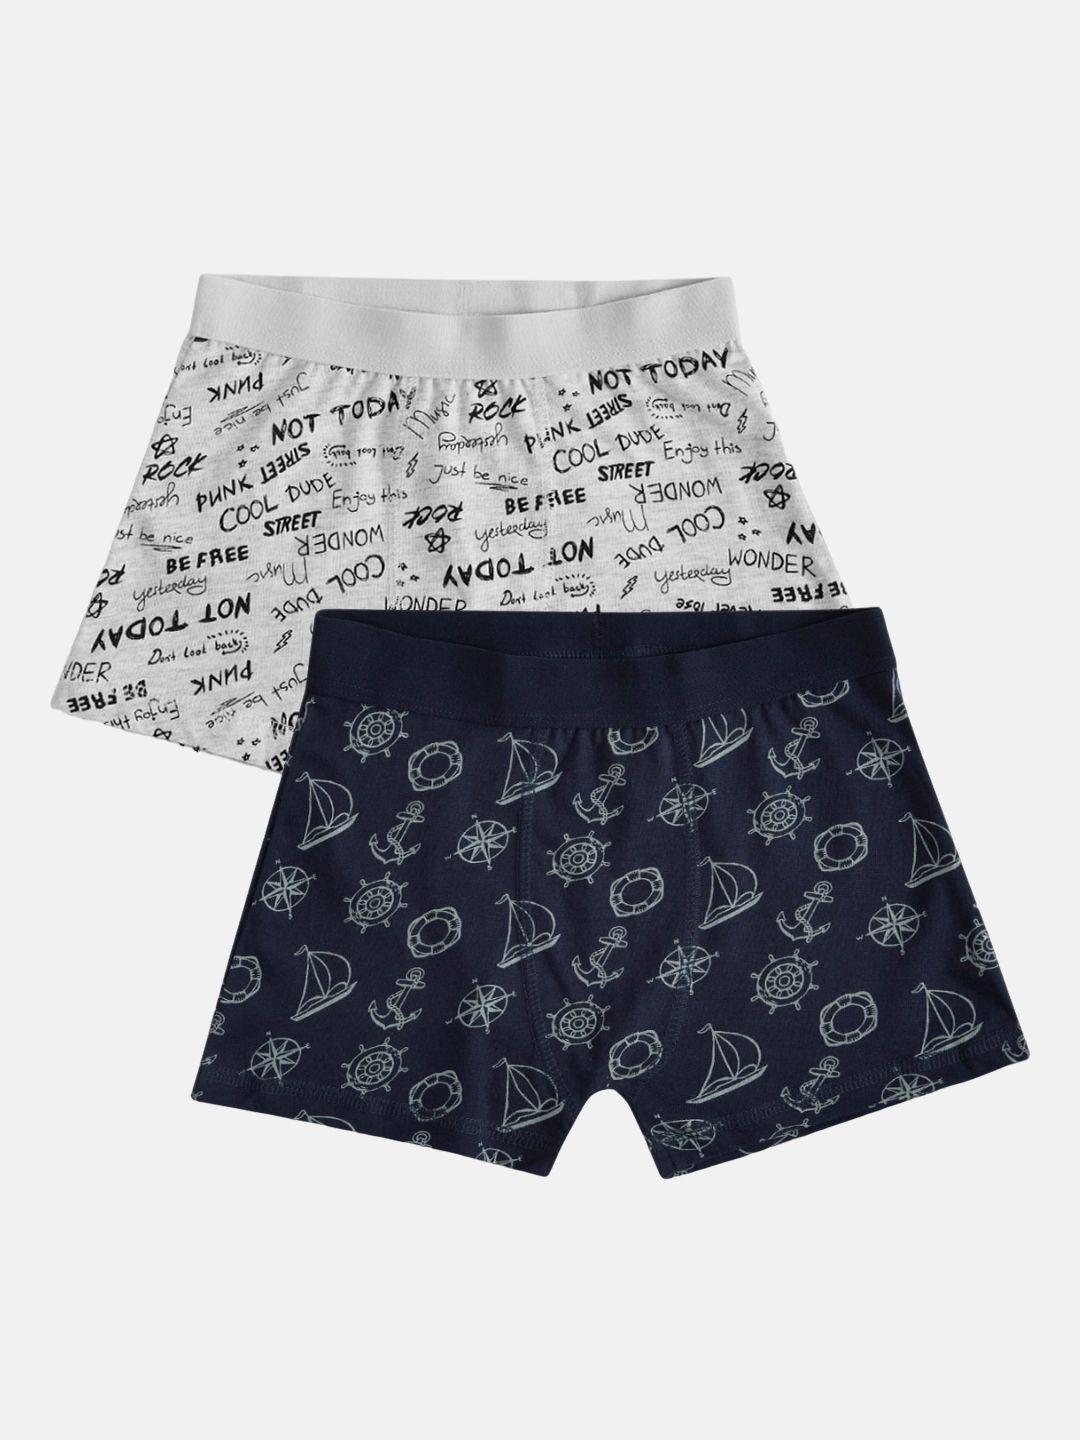 pantaloons junior boys pack of 2 printed cotton trunks 8905685685202